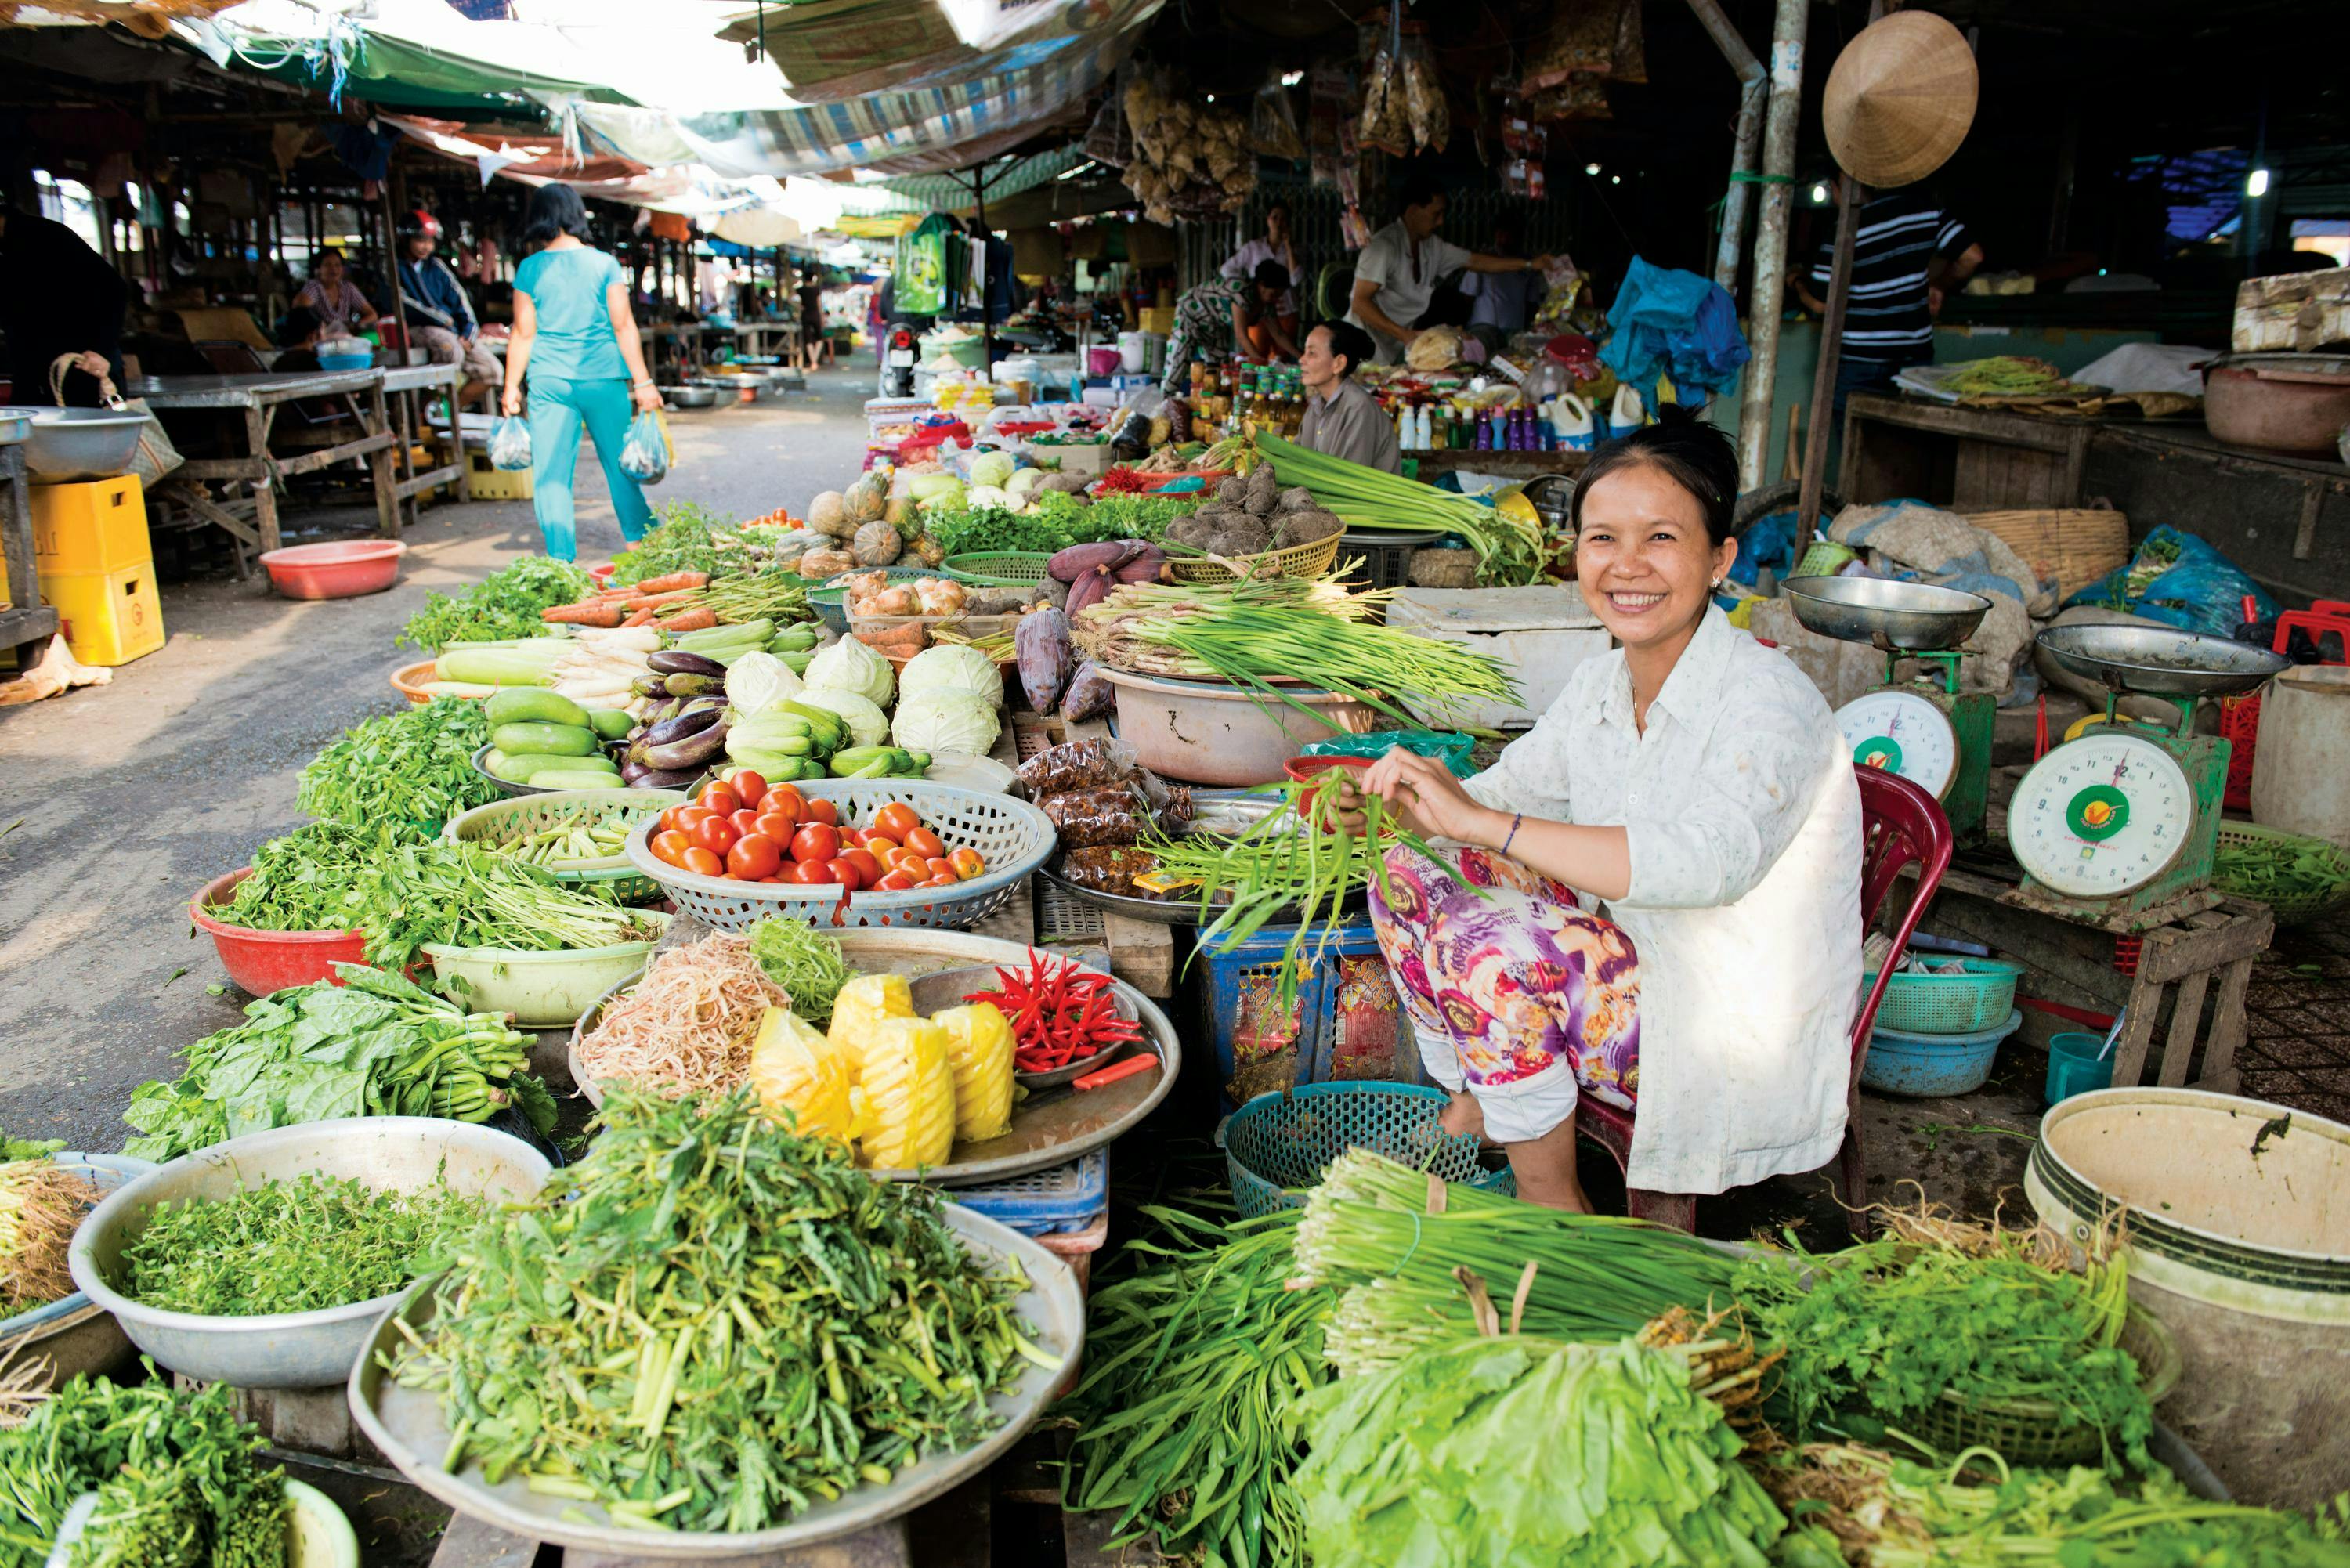 A vendor prepares produce at a local market in Cai Be, Vietnam